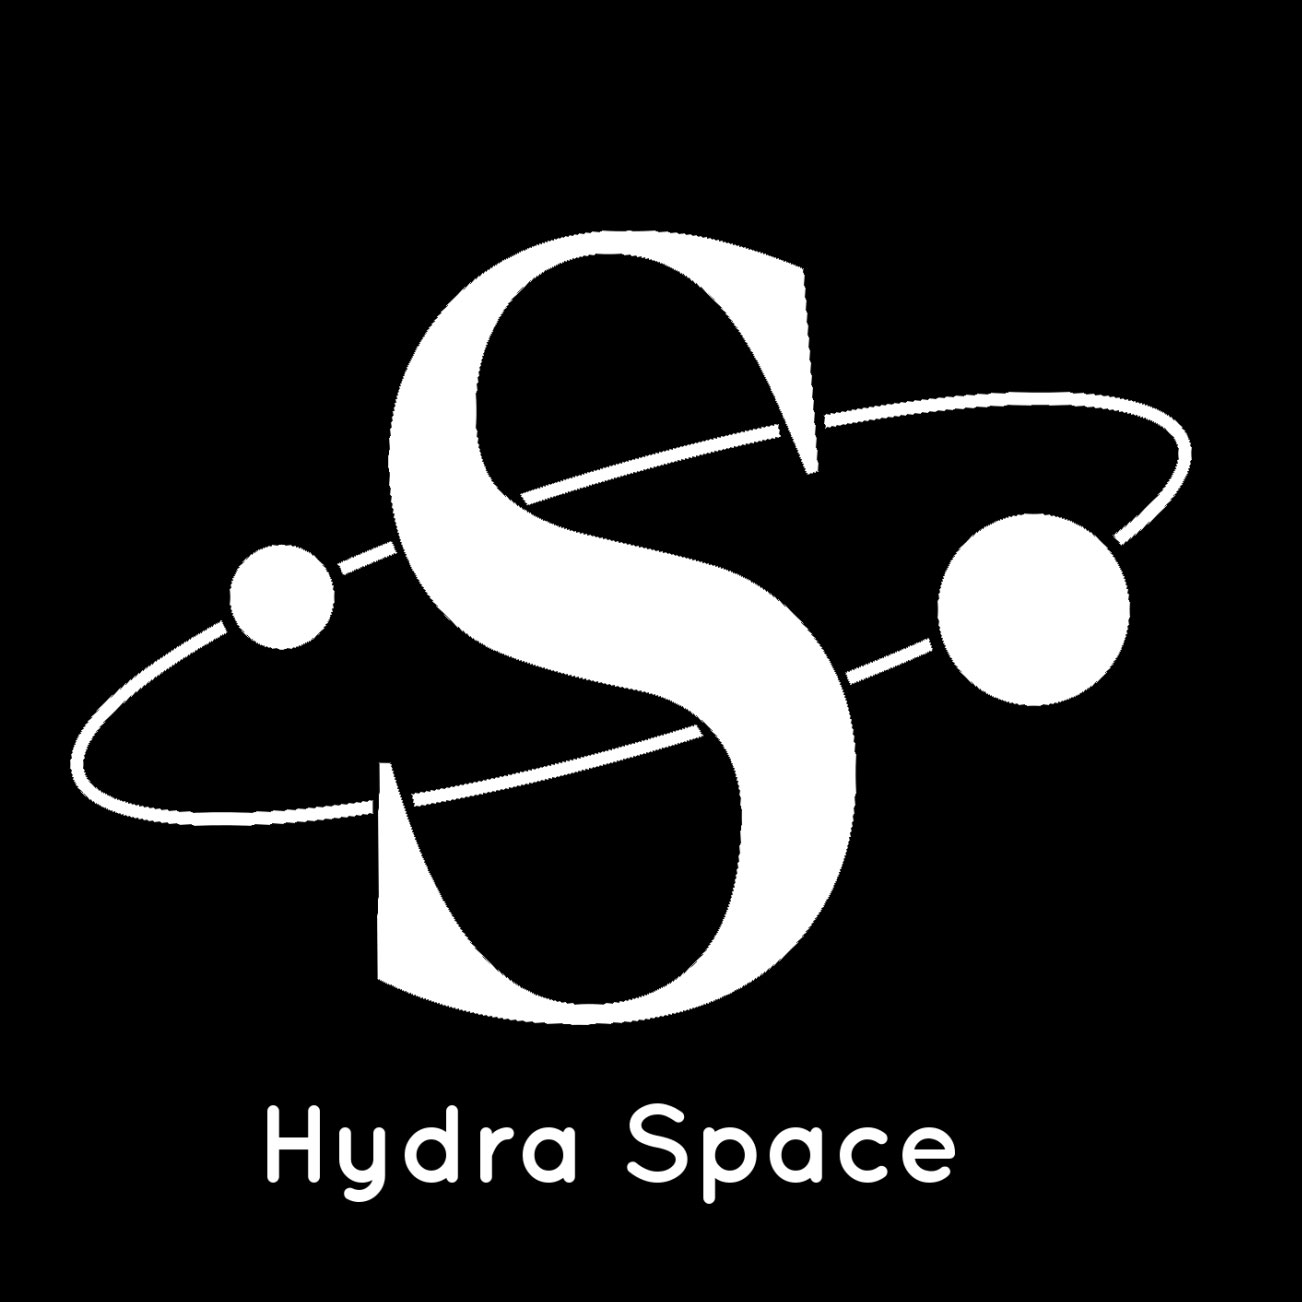 Hydra Space logo